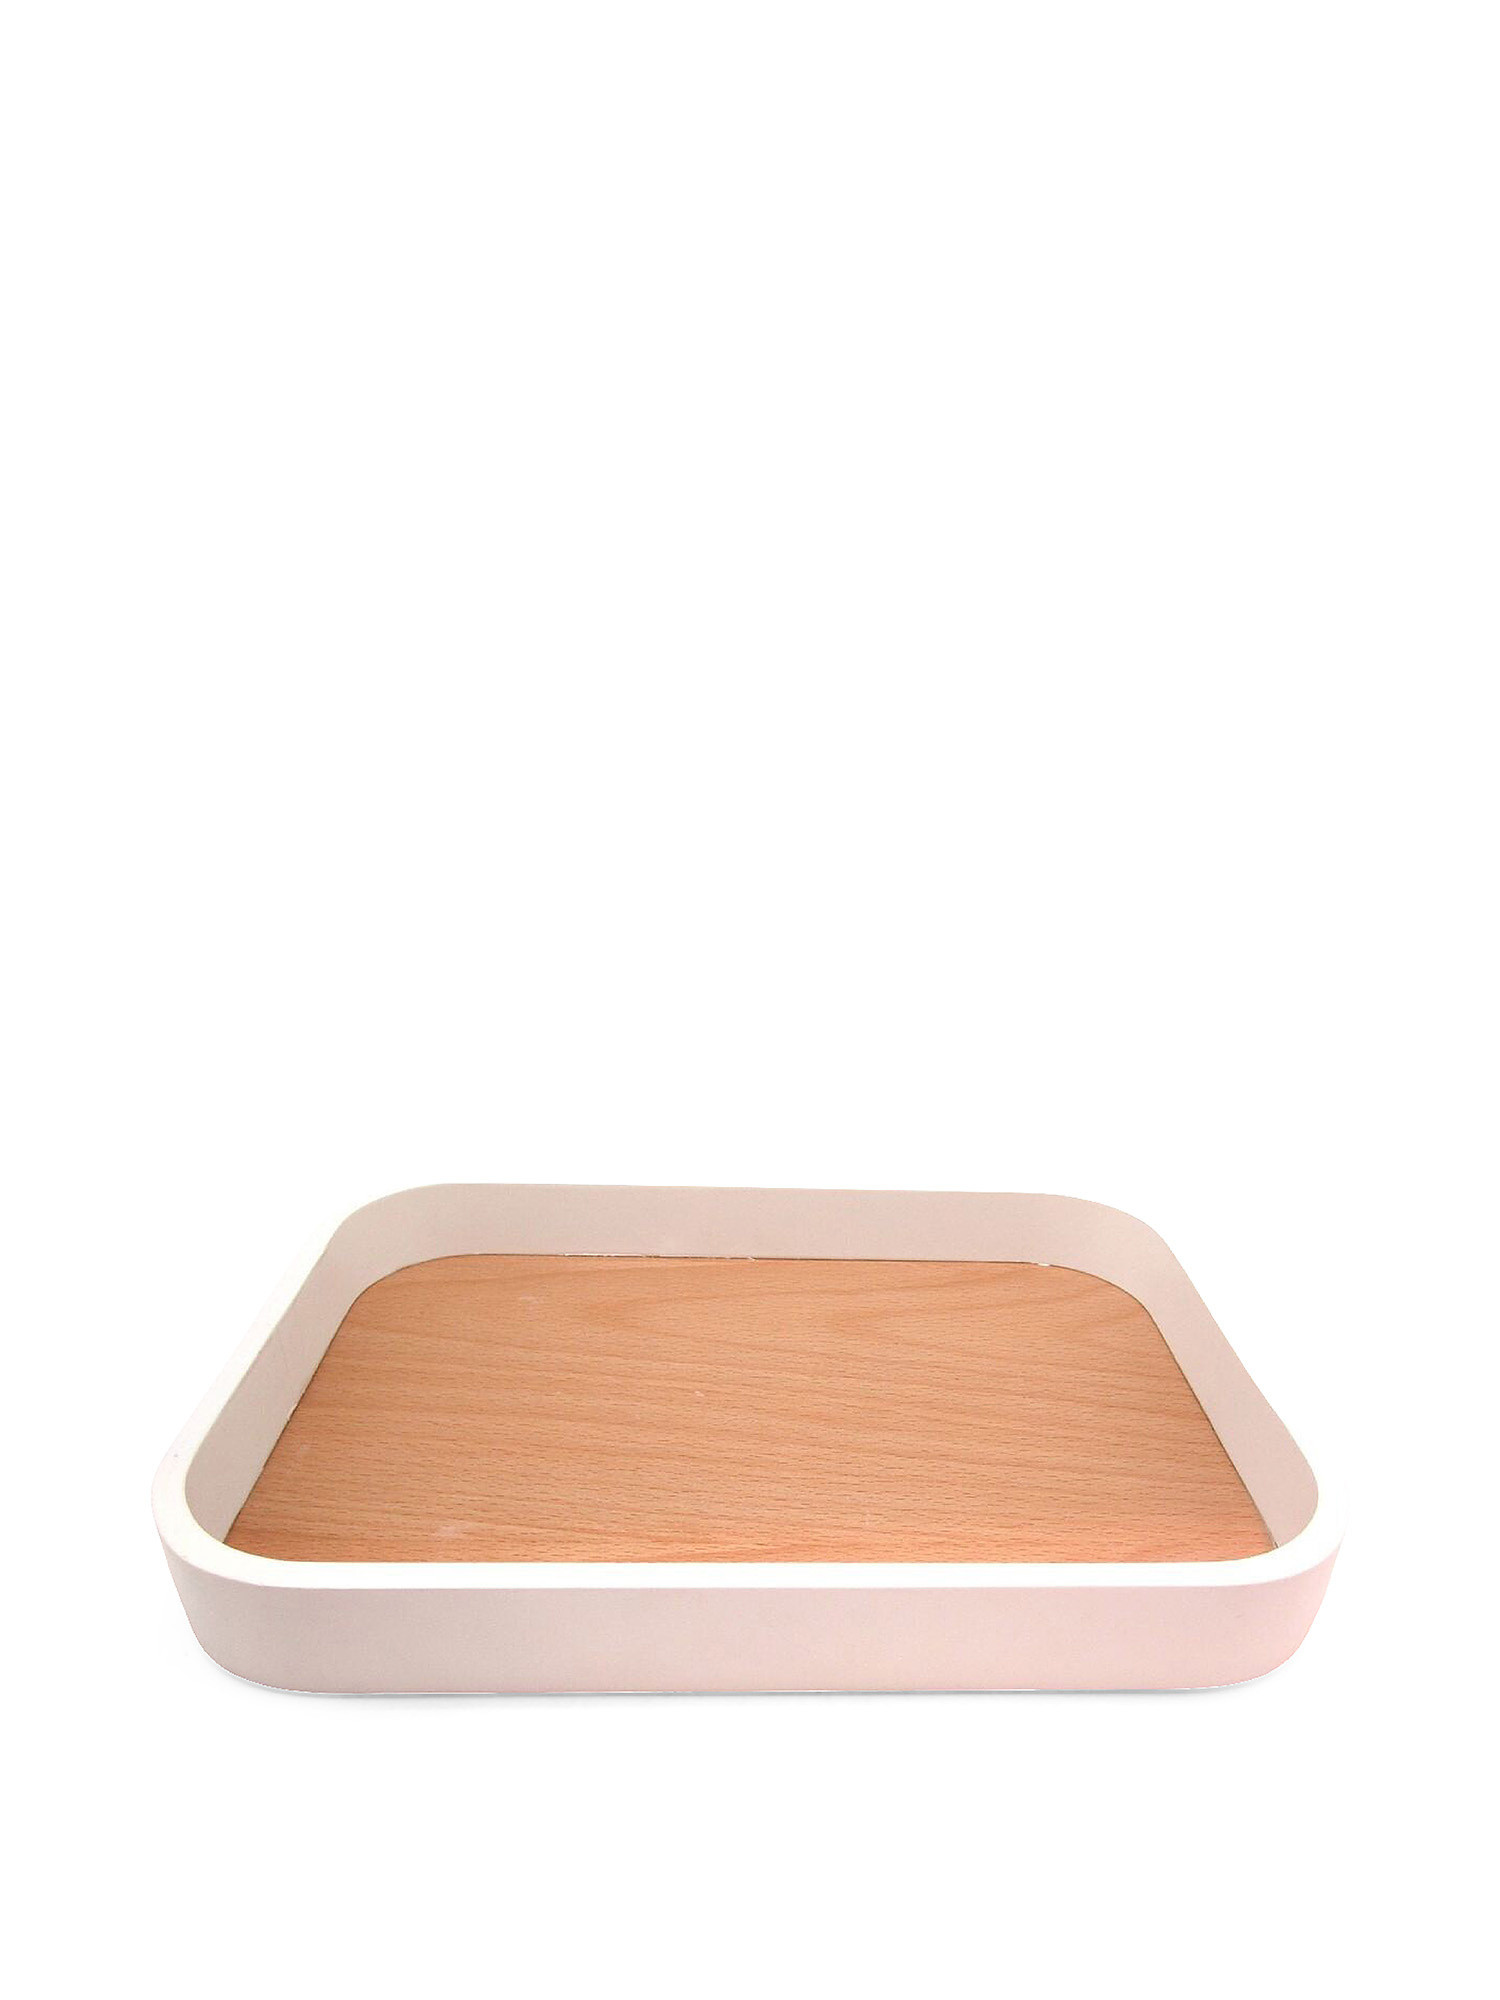 Loft decorative tray with walnut-effect surface, Black, large image number 0